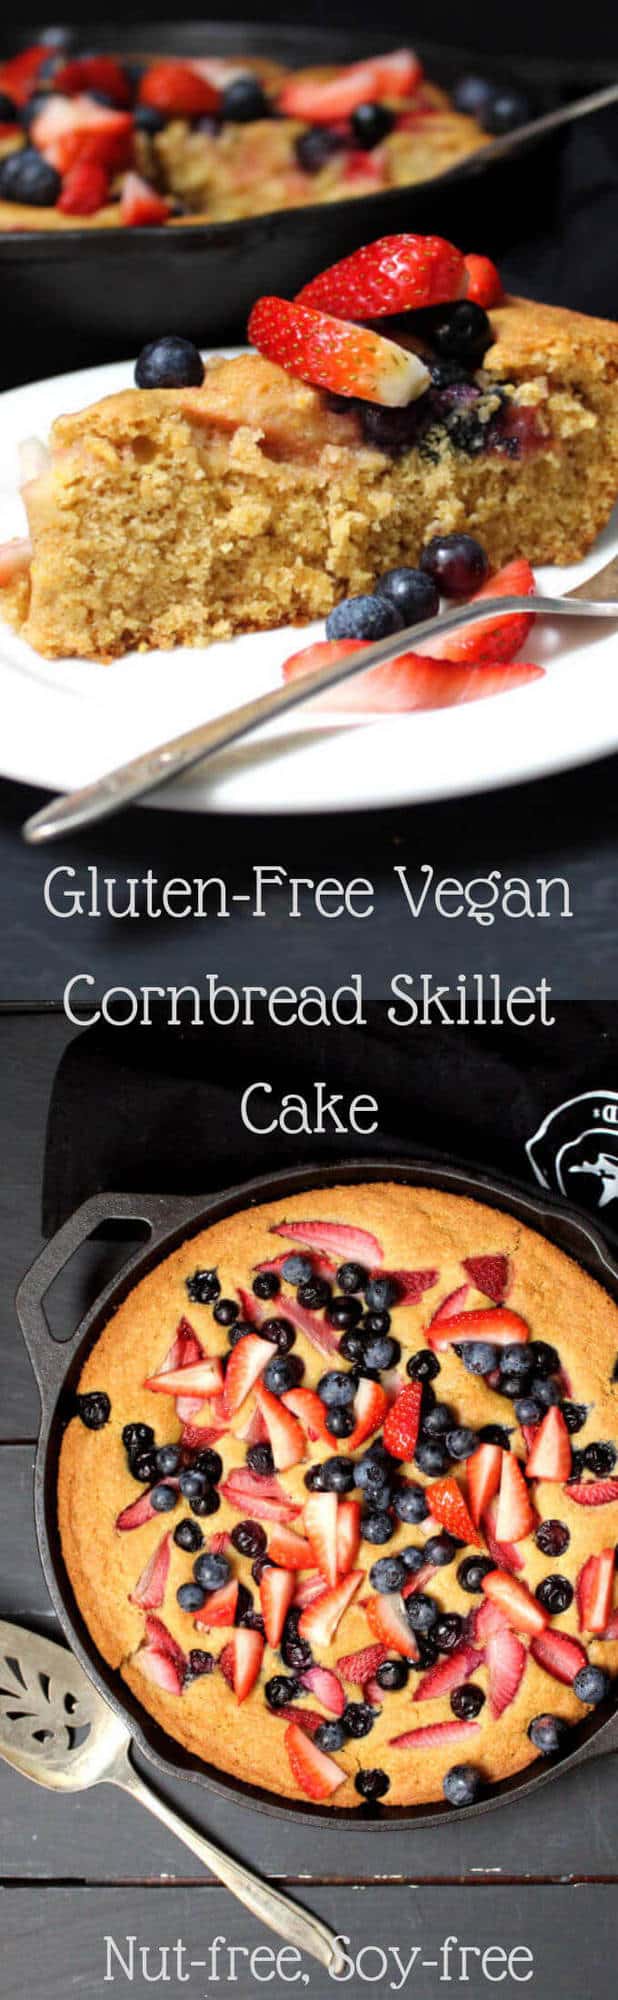 Images of glutenfree vegan Skillet Cornbread Cake with text inlay that says "gluten-free vegan cornbread skillet cake"